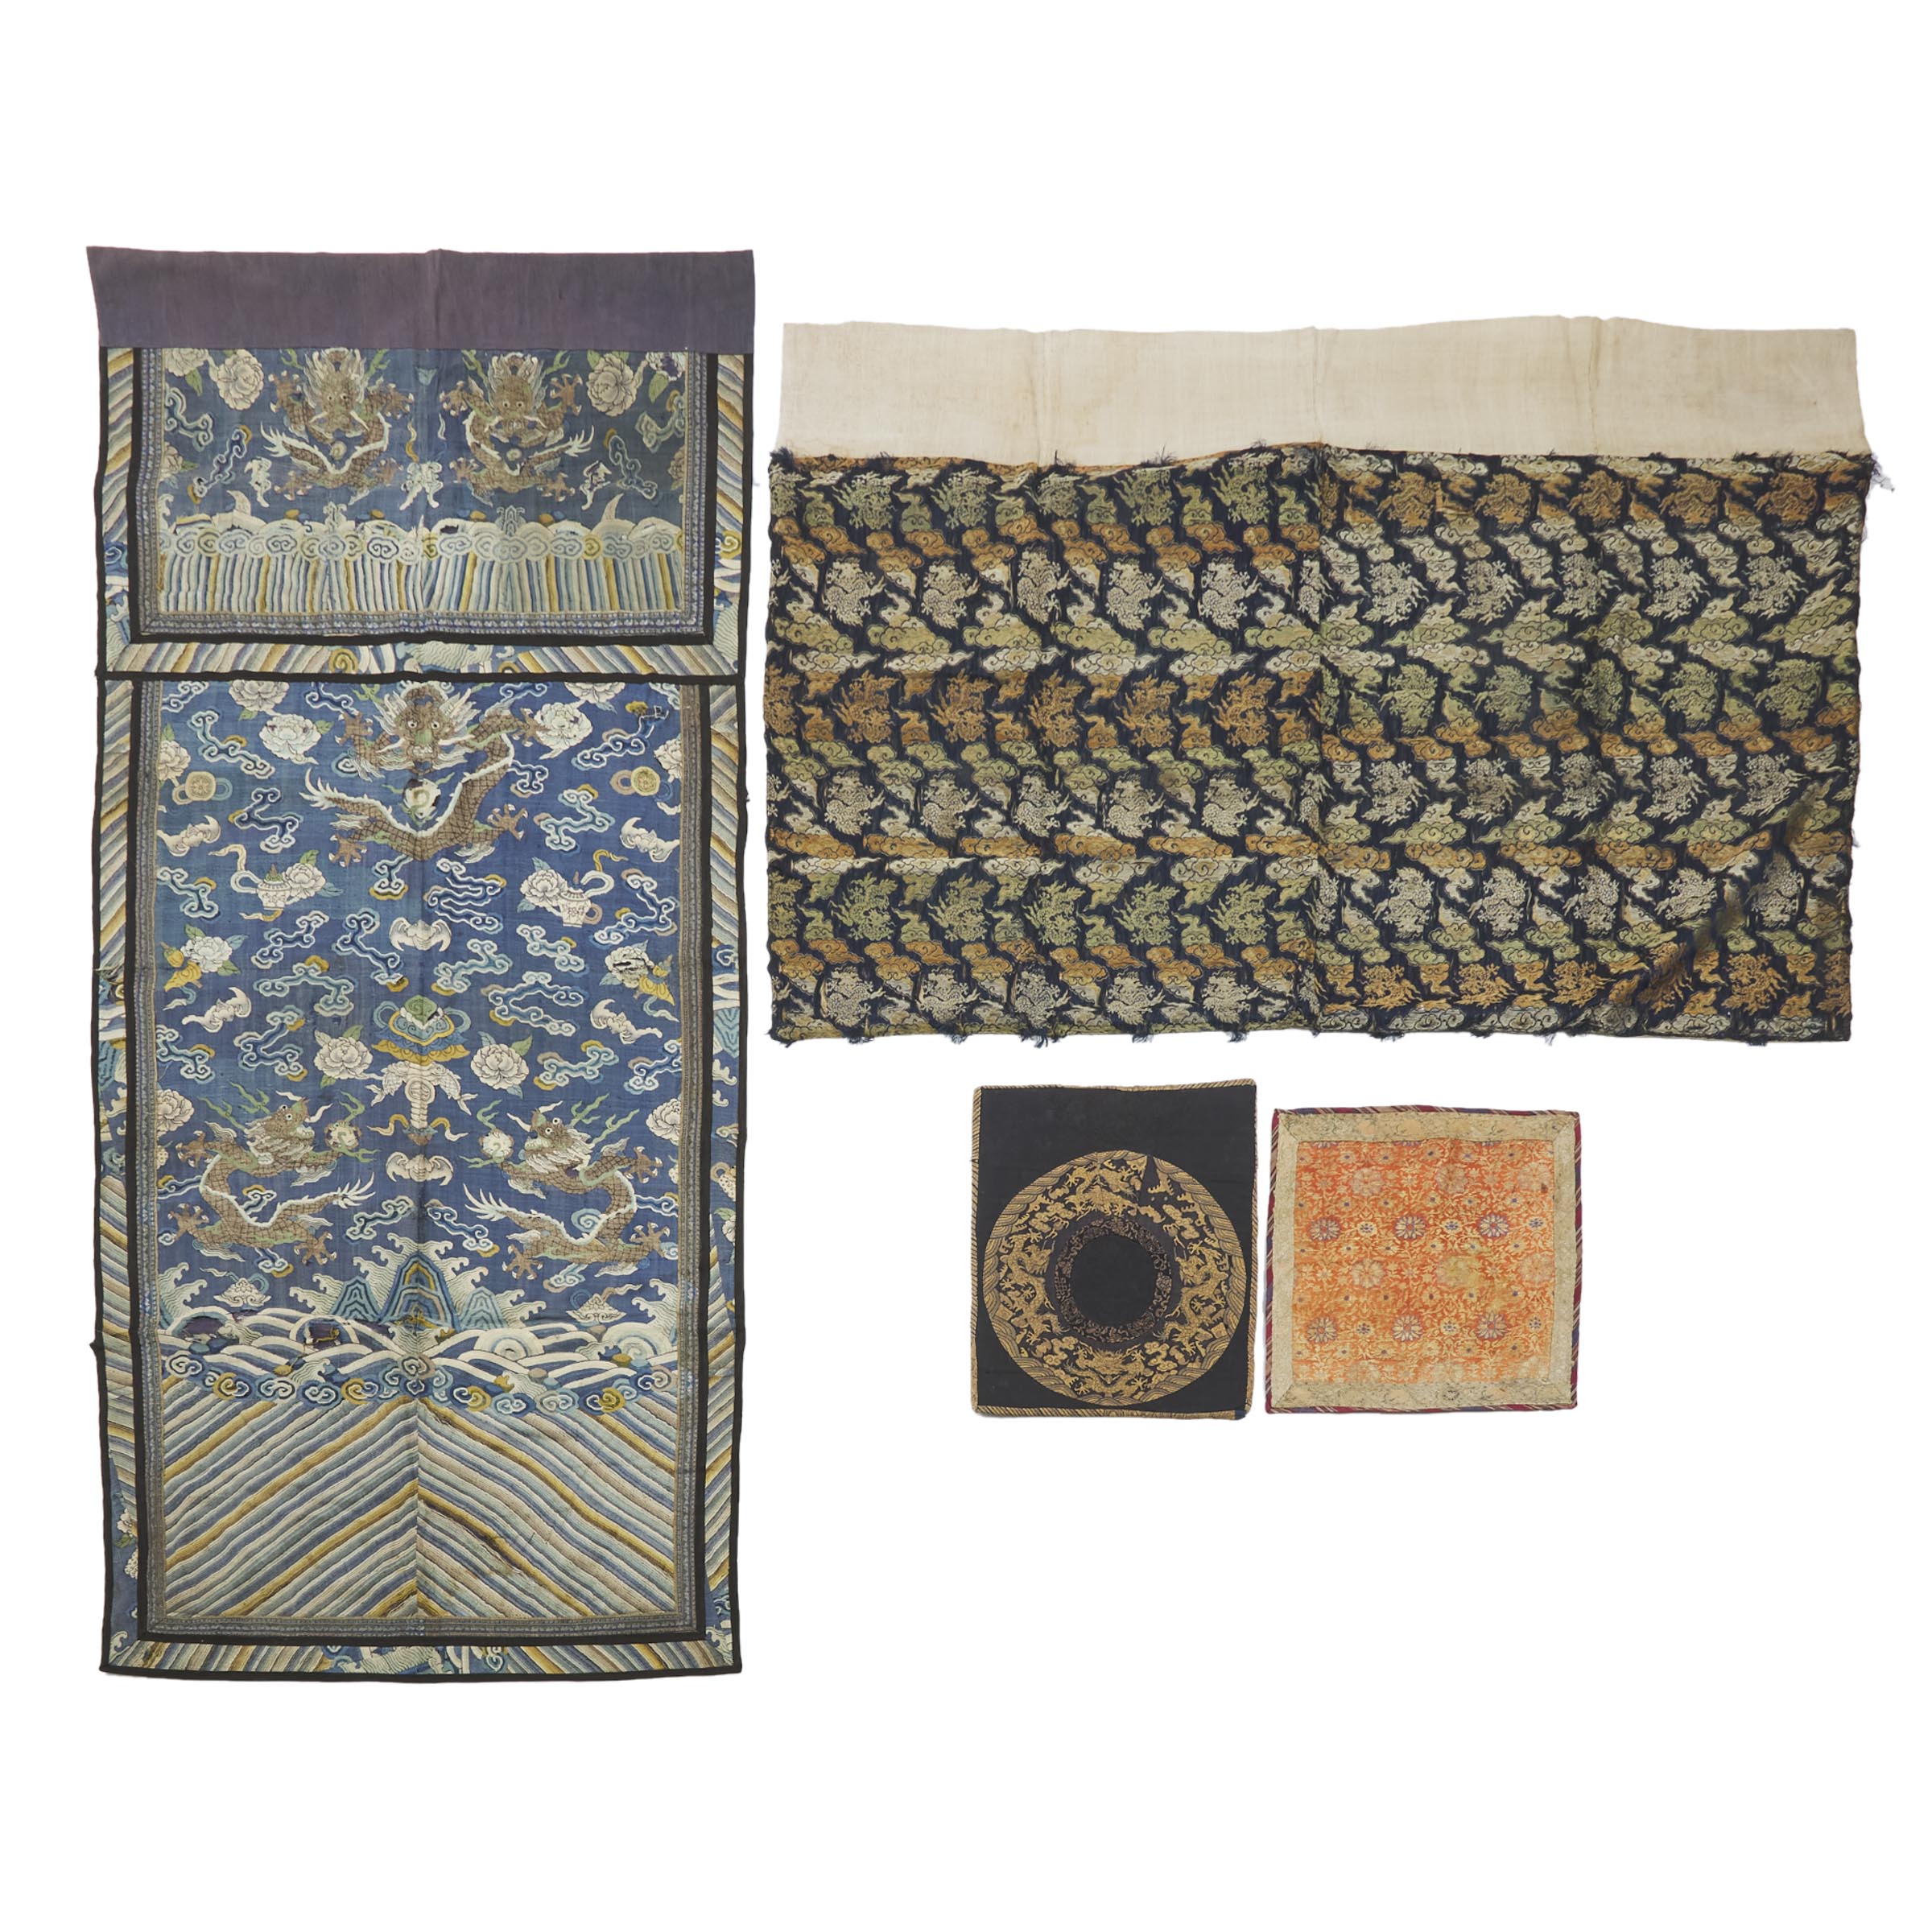 Two Kesi Silk Embroidered 'Dragon' Panels, Together With Two Embroidered Panels, 19th Century